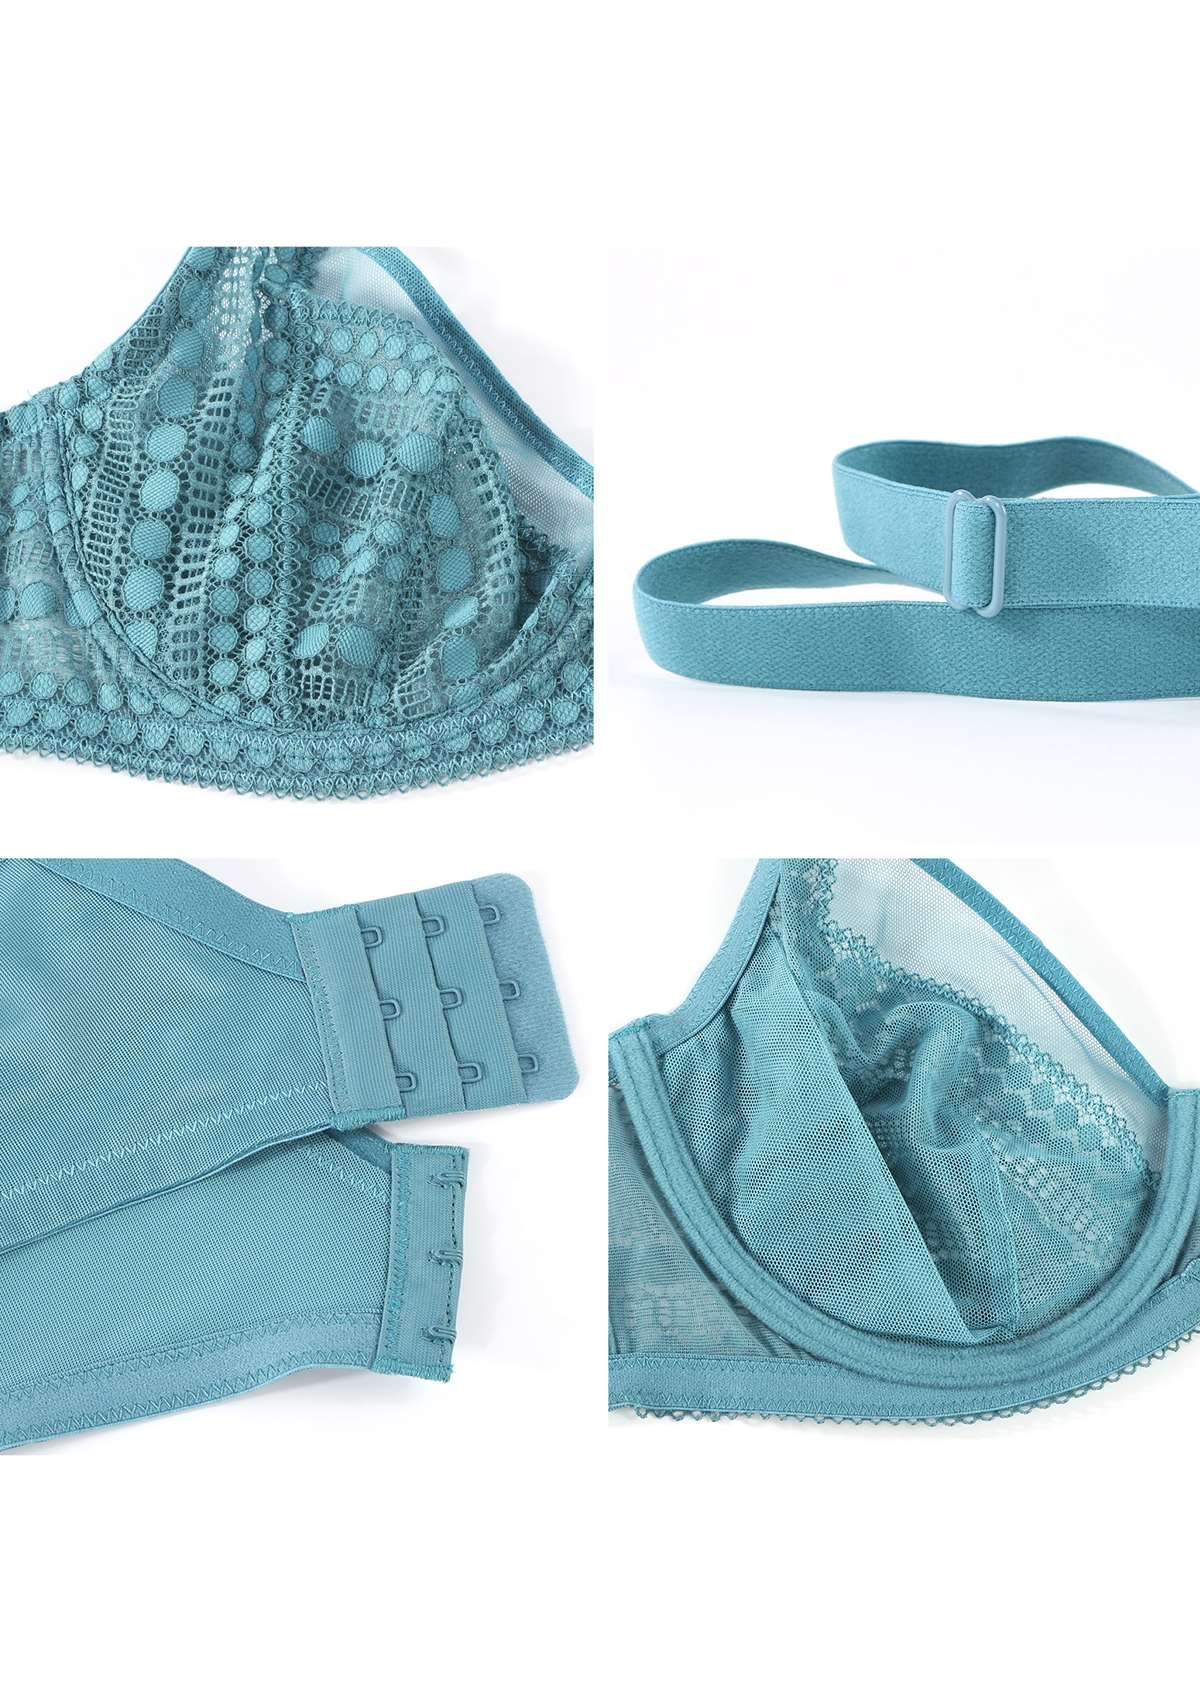 HSIA Heroine Matching Bra And Underwear Set: Bra For Big Boobs - Brittany Blue / 34 / DDD/F